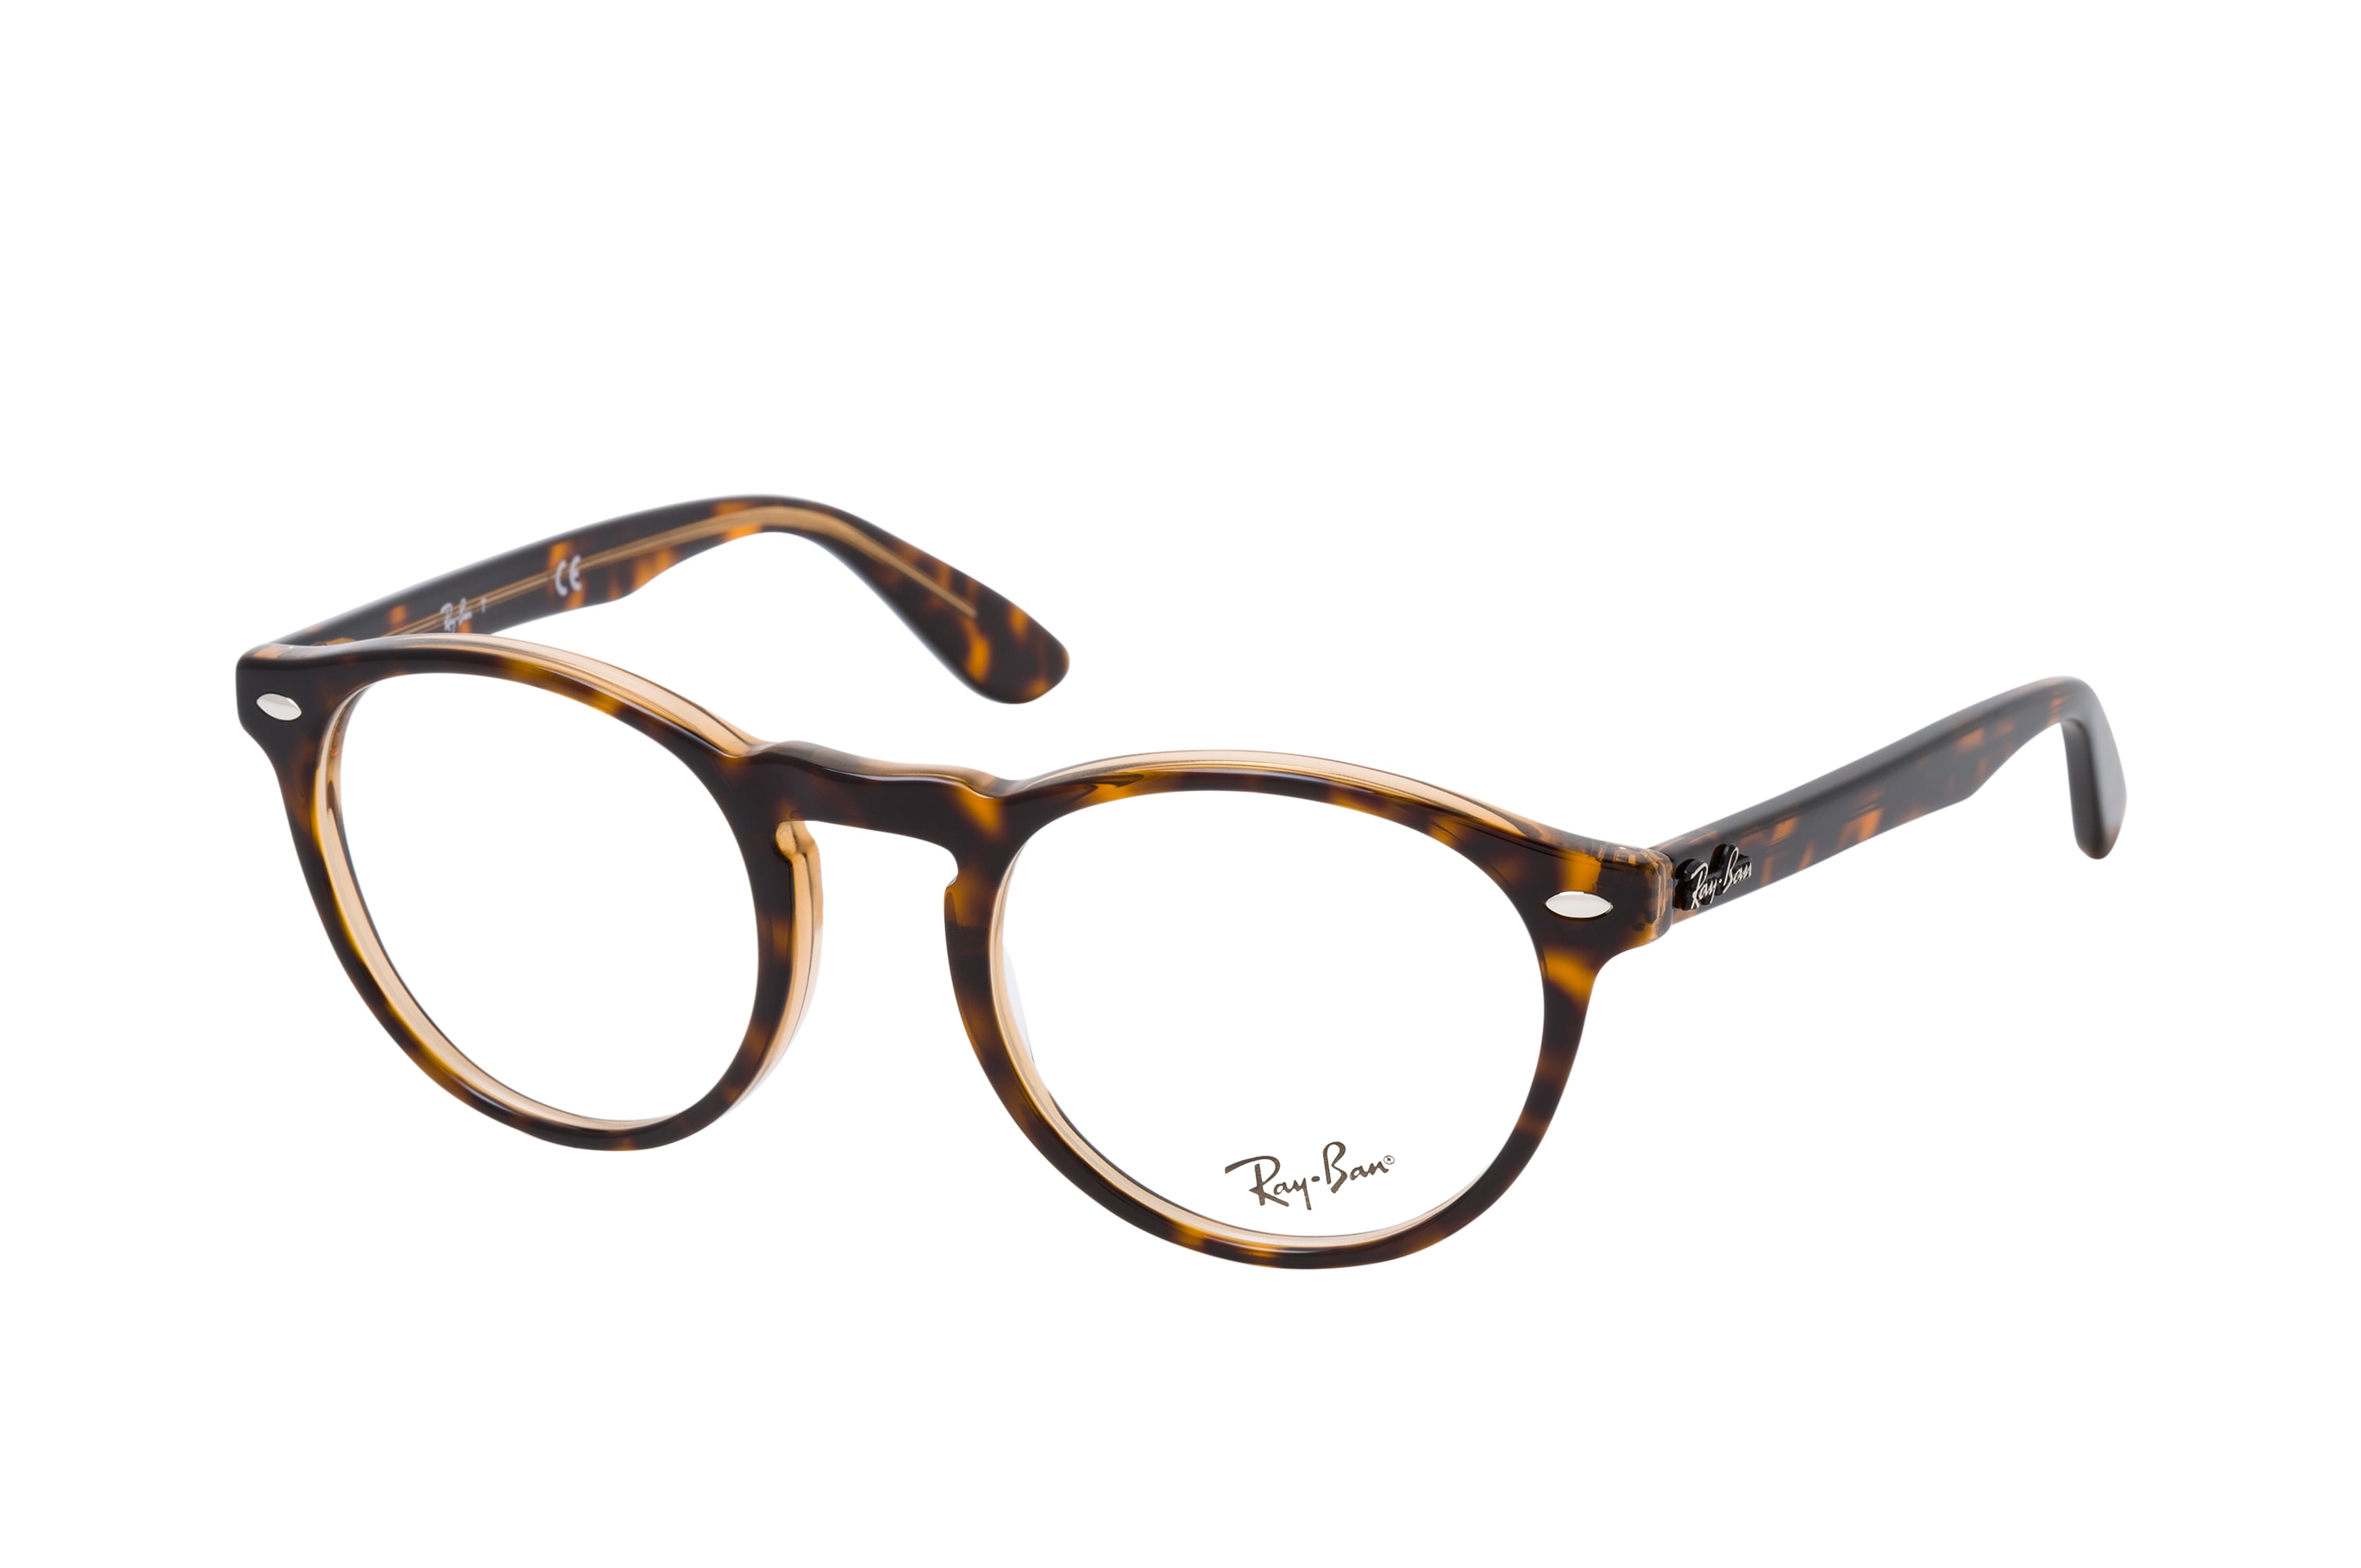 Buy Ray-Ban RX 5283 5989 Glasses